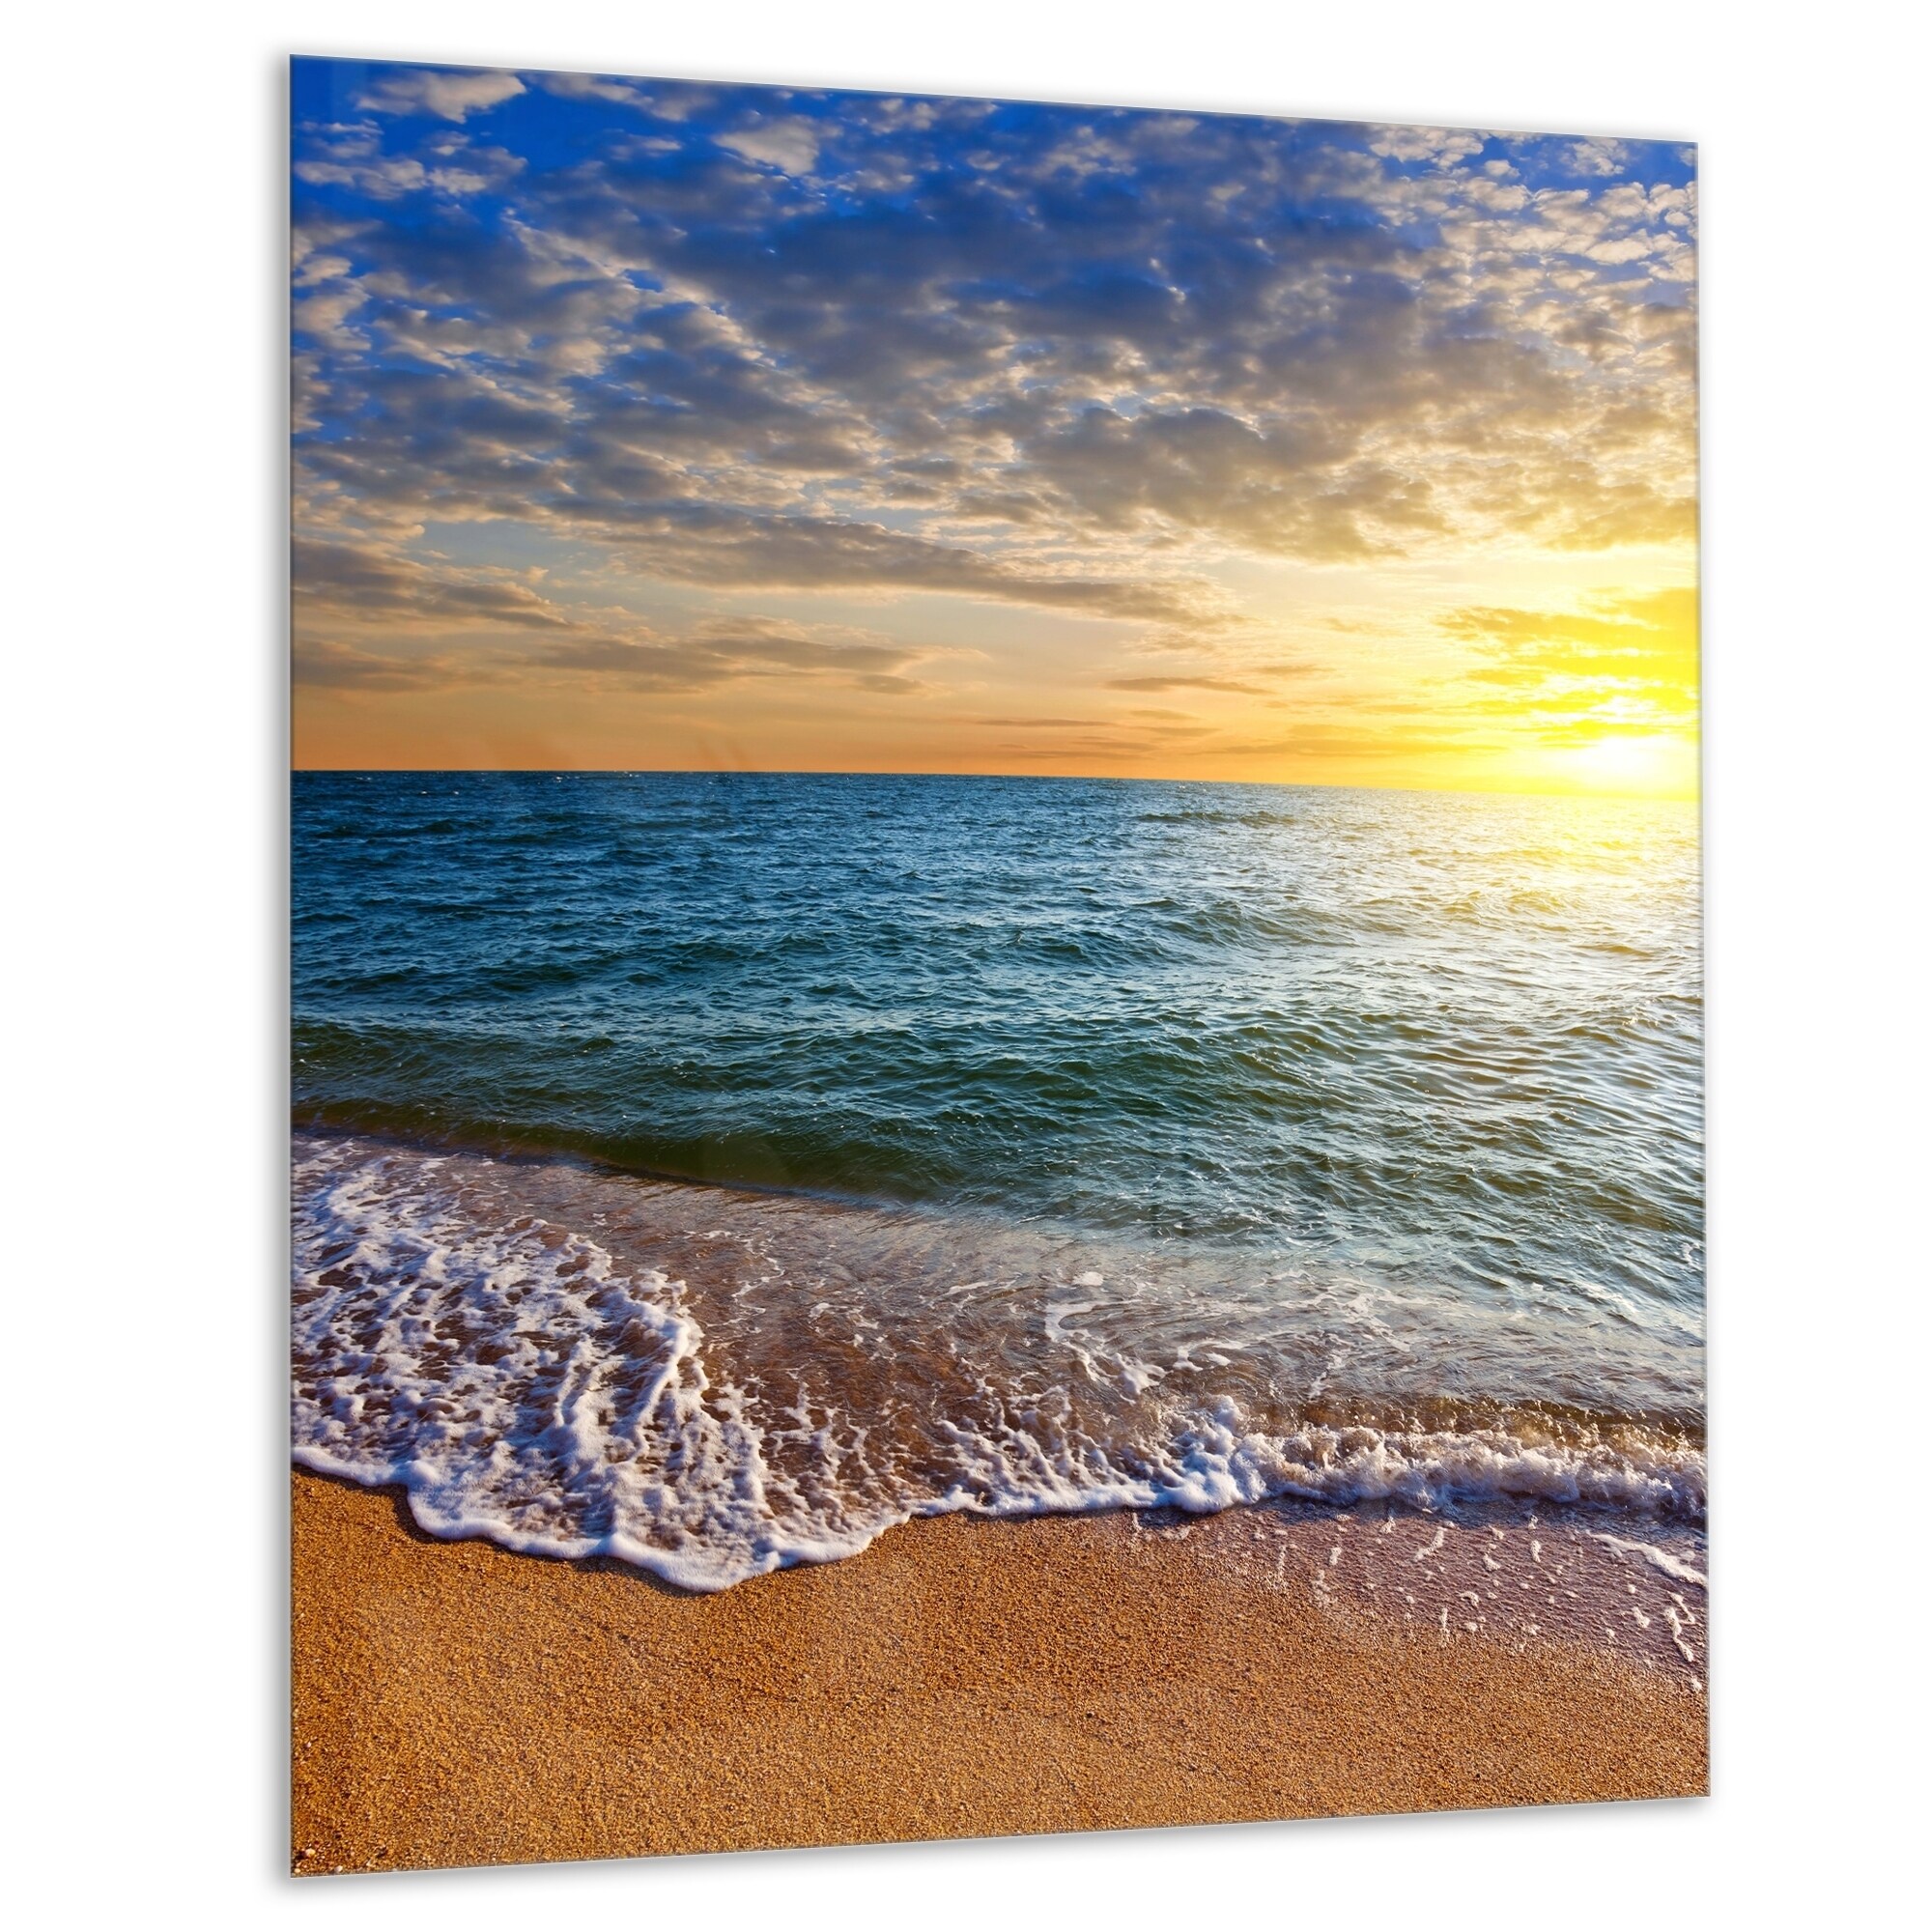 OCEAN BEACH SUNSET AUSTRALIA satin photo CANVAS print  painting landscape 